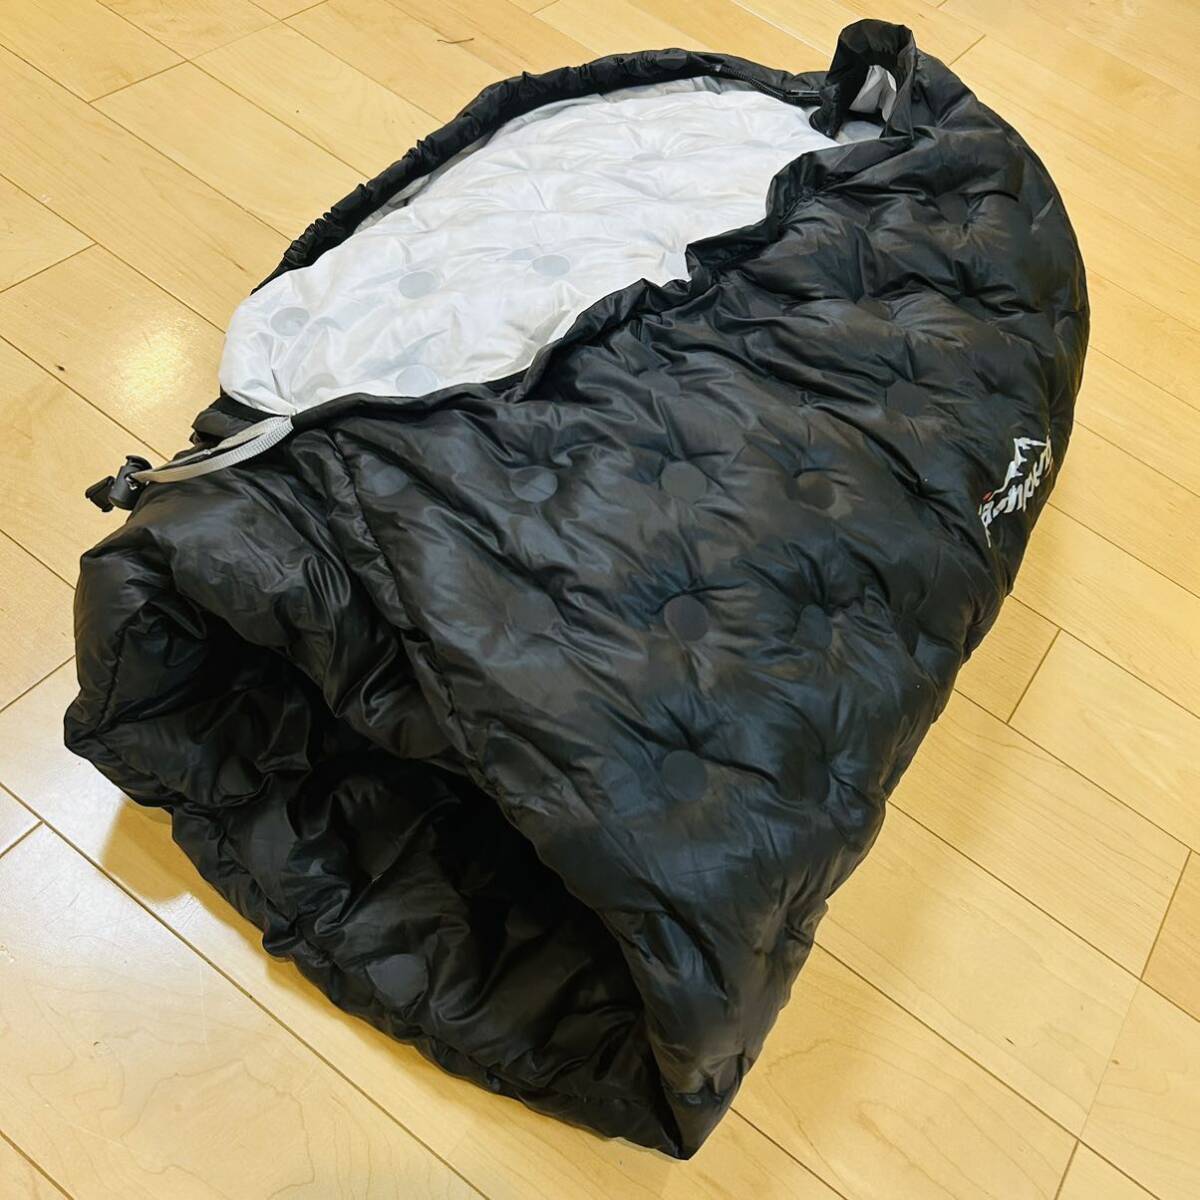 KAMPERBOX最高品質 極細500gアヒルダウン マミー型寝袋 シュラフ厚暖撥水 0-5℃ アウトドア キャンプ 野外登山 車中泊 210x75cm 910gの画像9